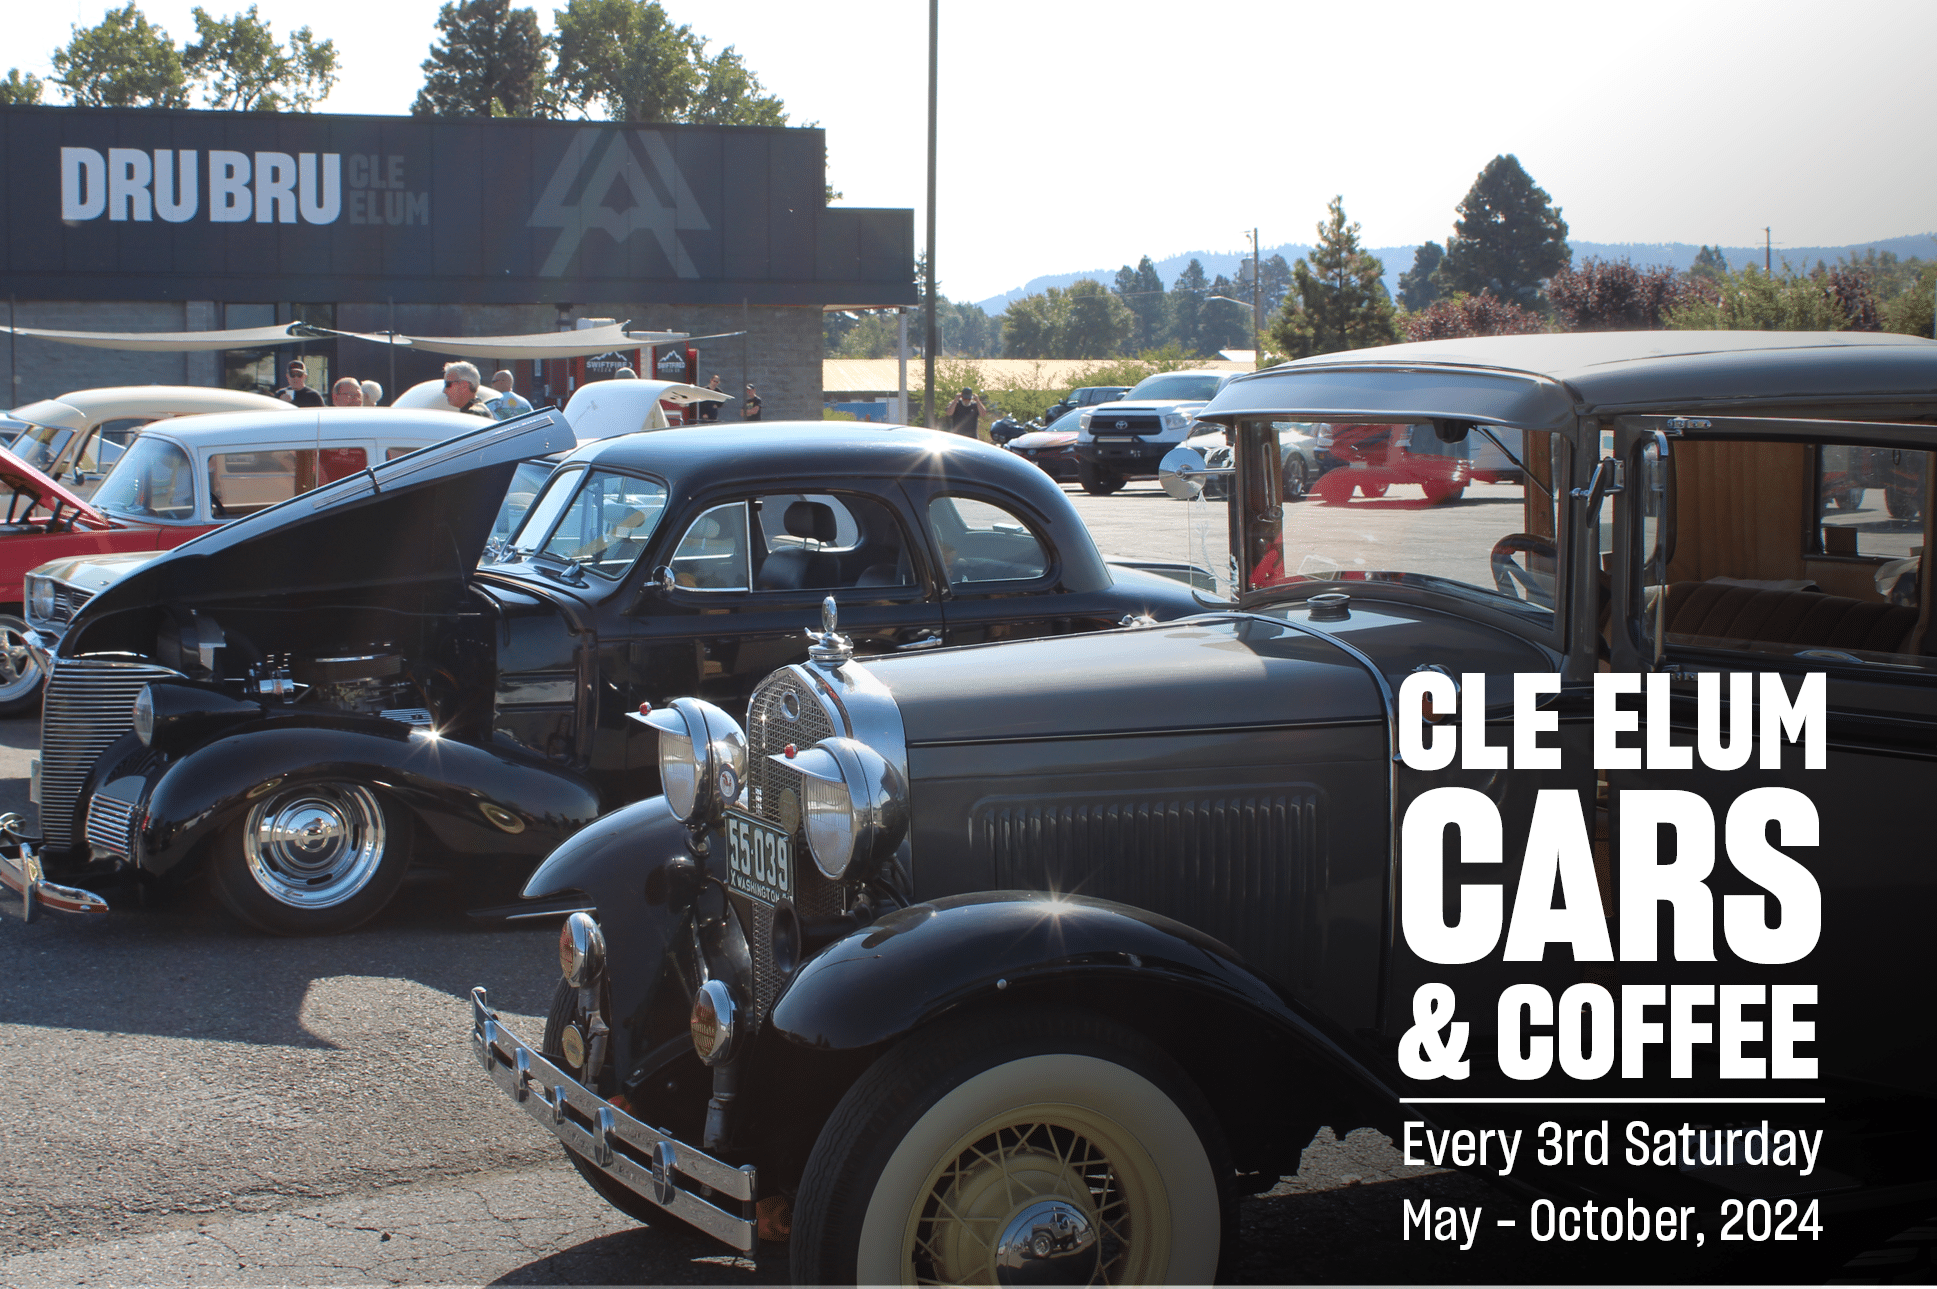 Cle Elum Cars & Coffee